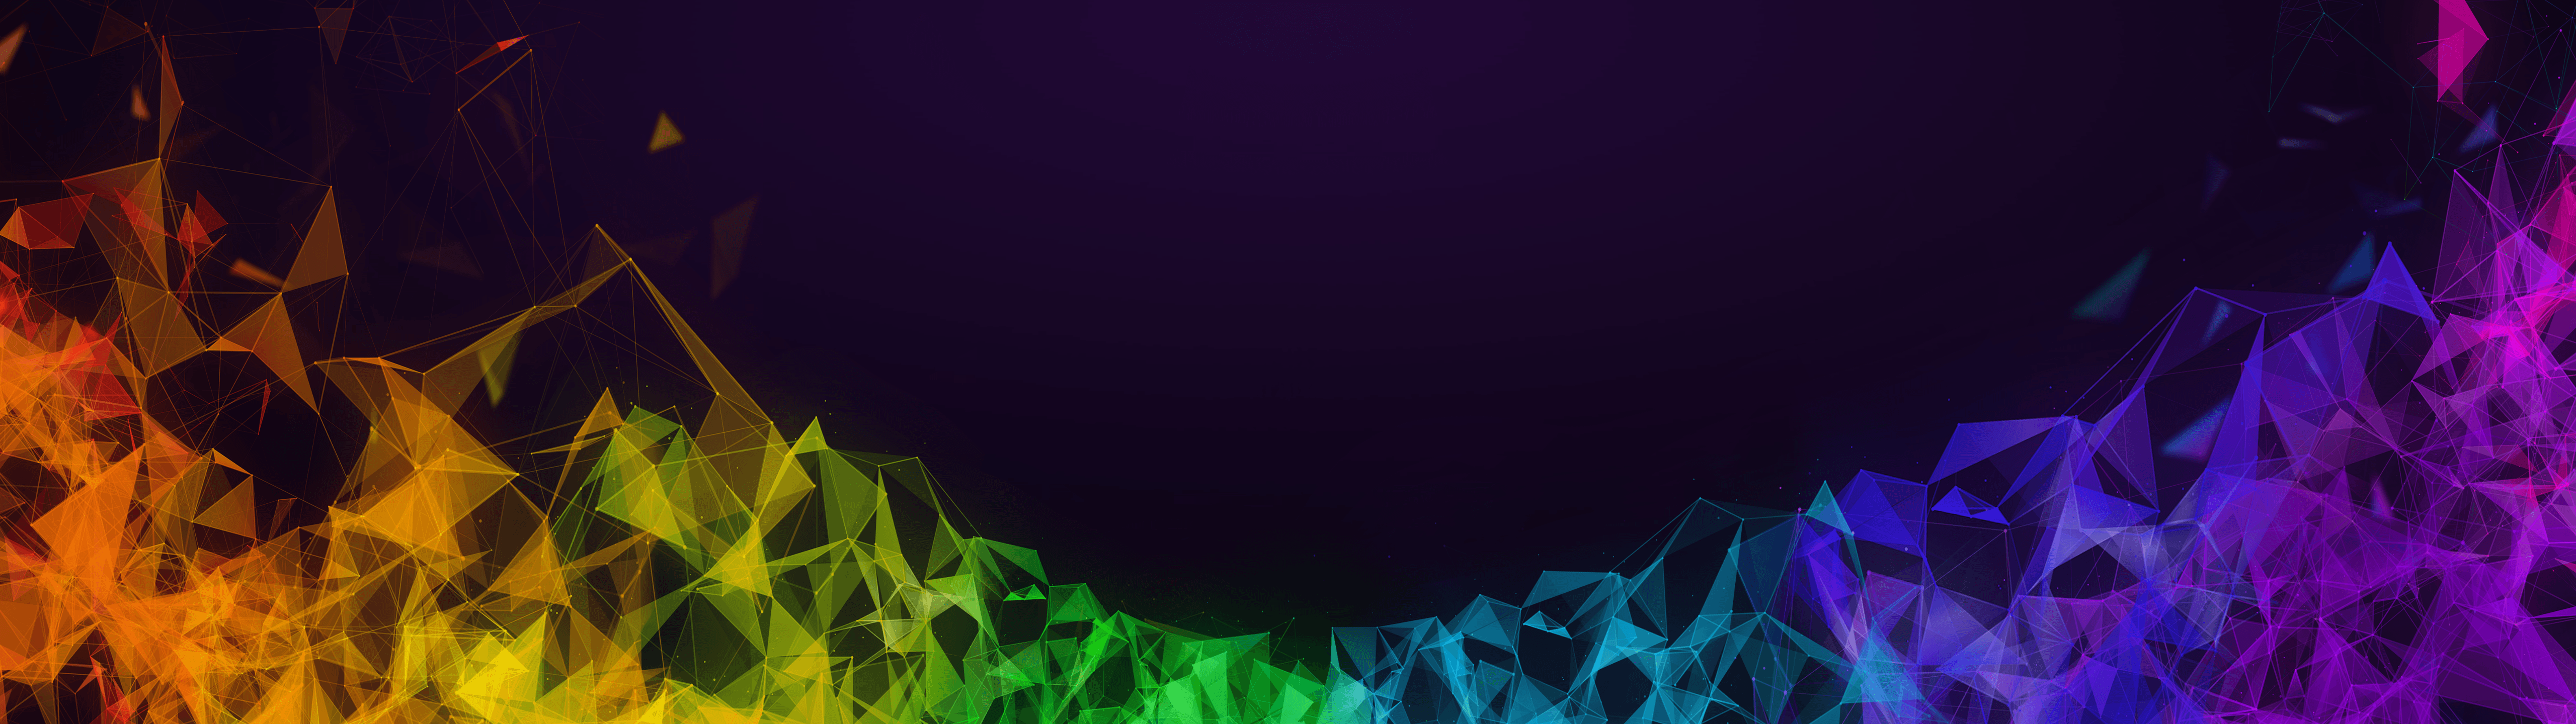 Requested 5120x1440 edit for Razer prism wallpaper, no logo